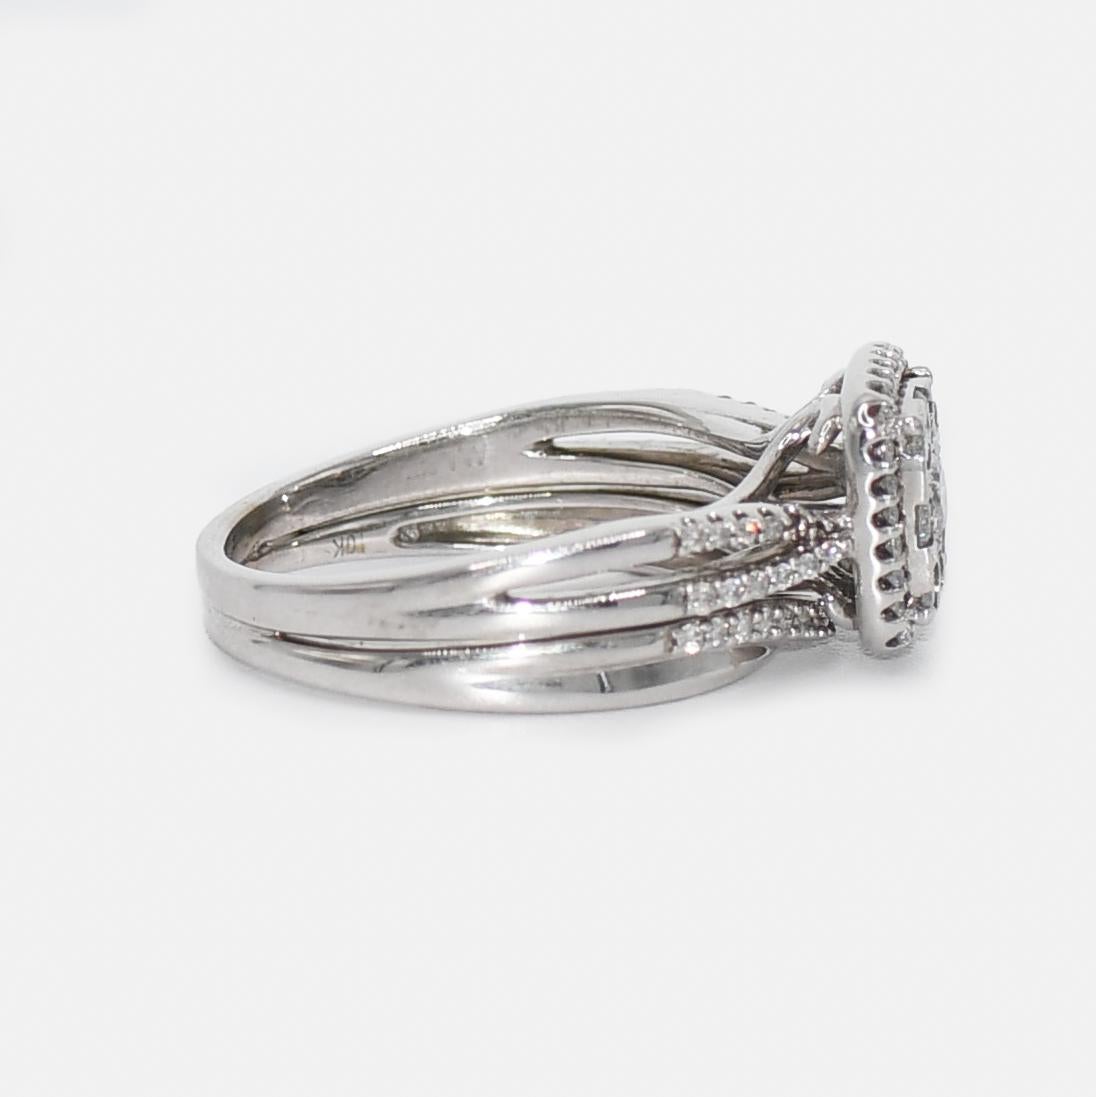 Brilliant Cut 10k White Gold Diamond Ring 0.40tdw, 5.5g For Sale